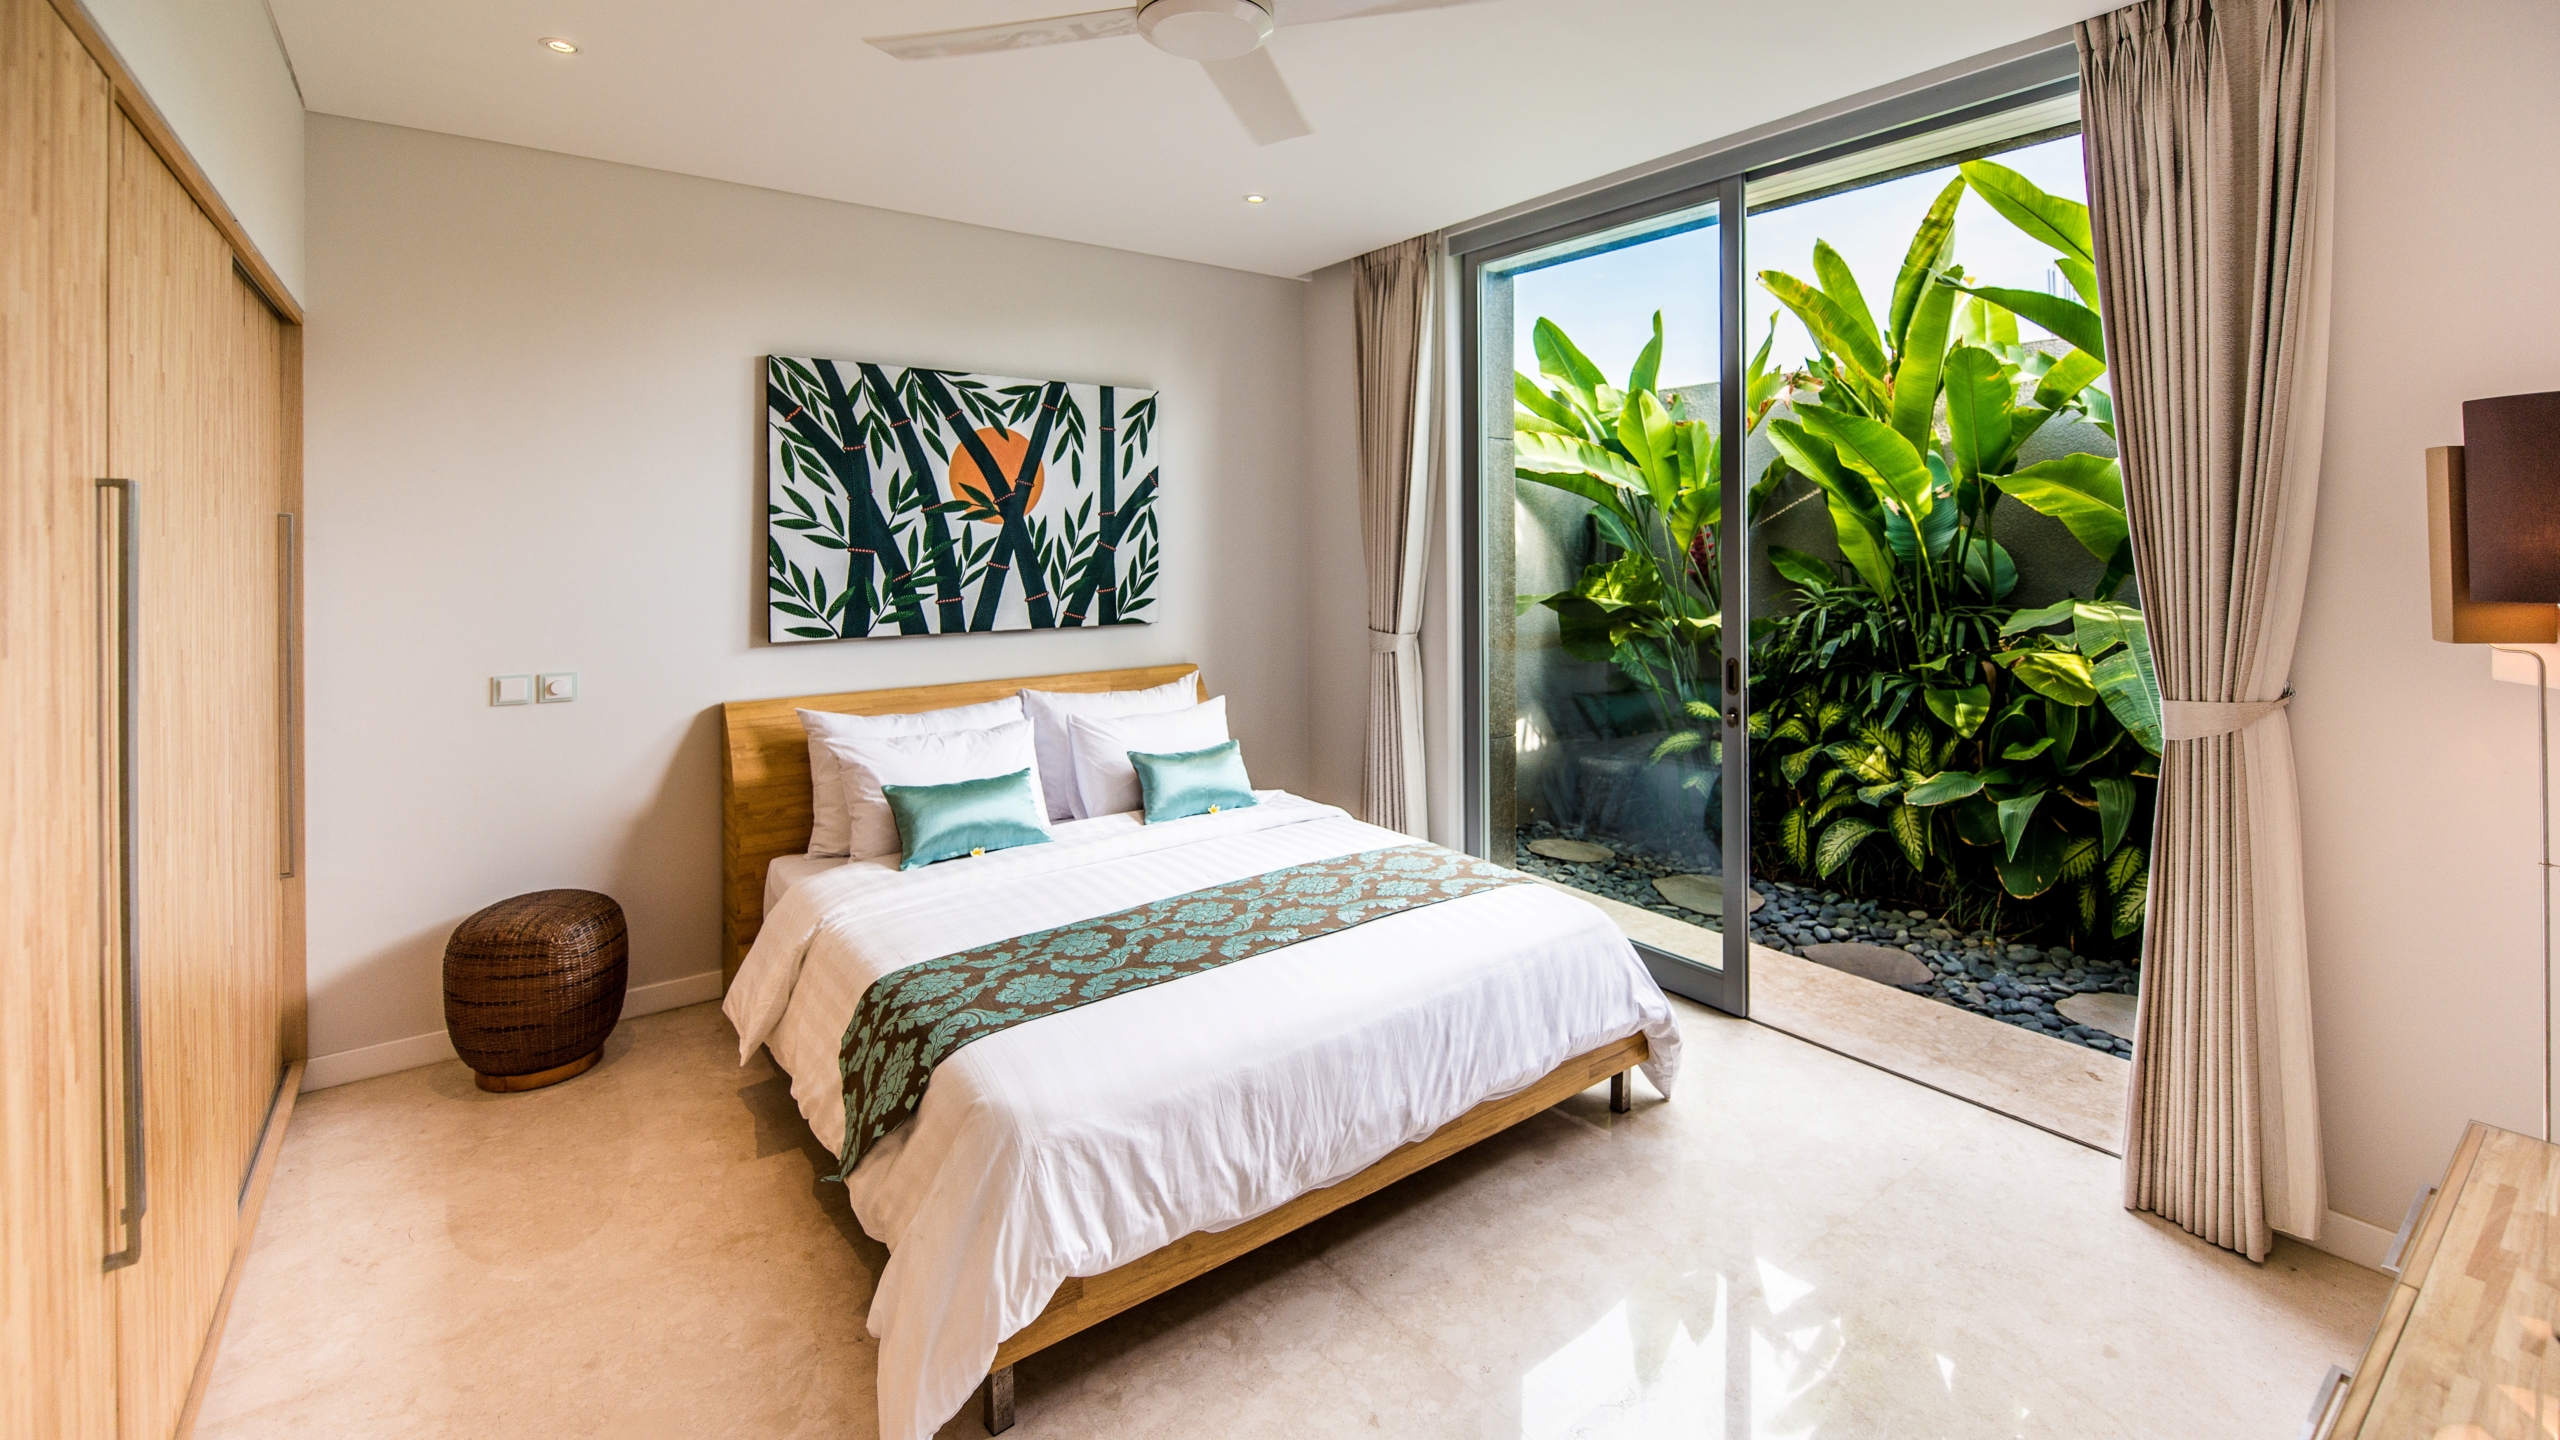 Bedroom with View - Villa Damai Aramanis - Seminyak, Bali